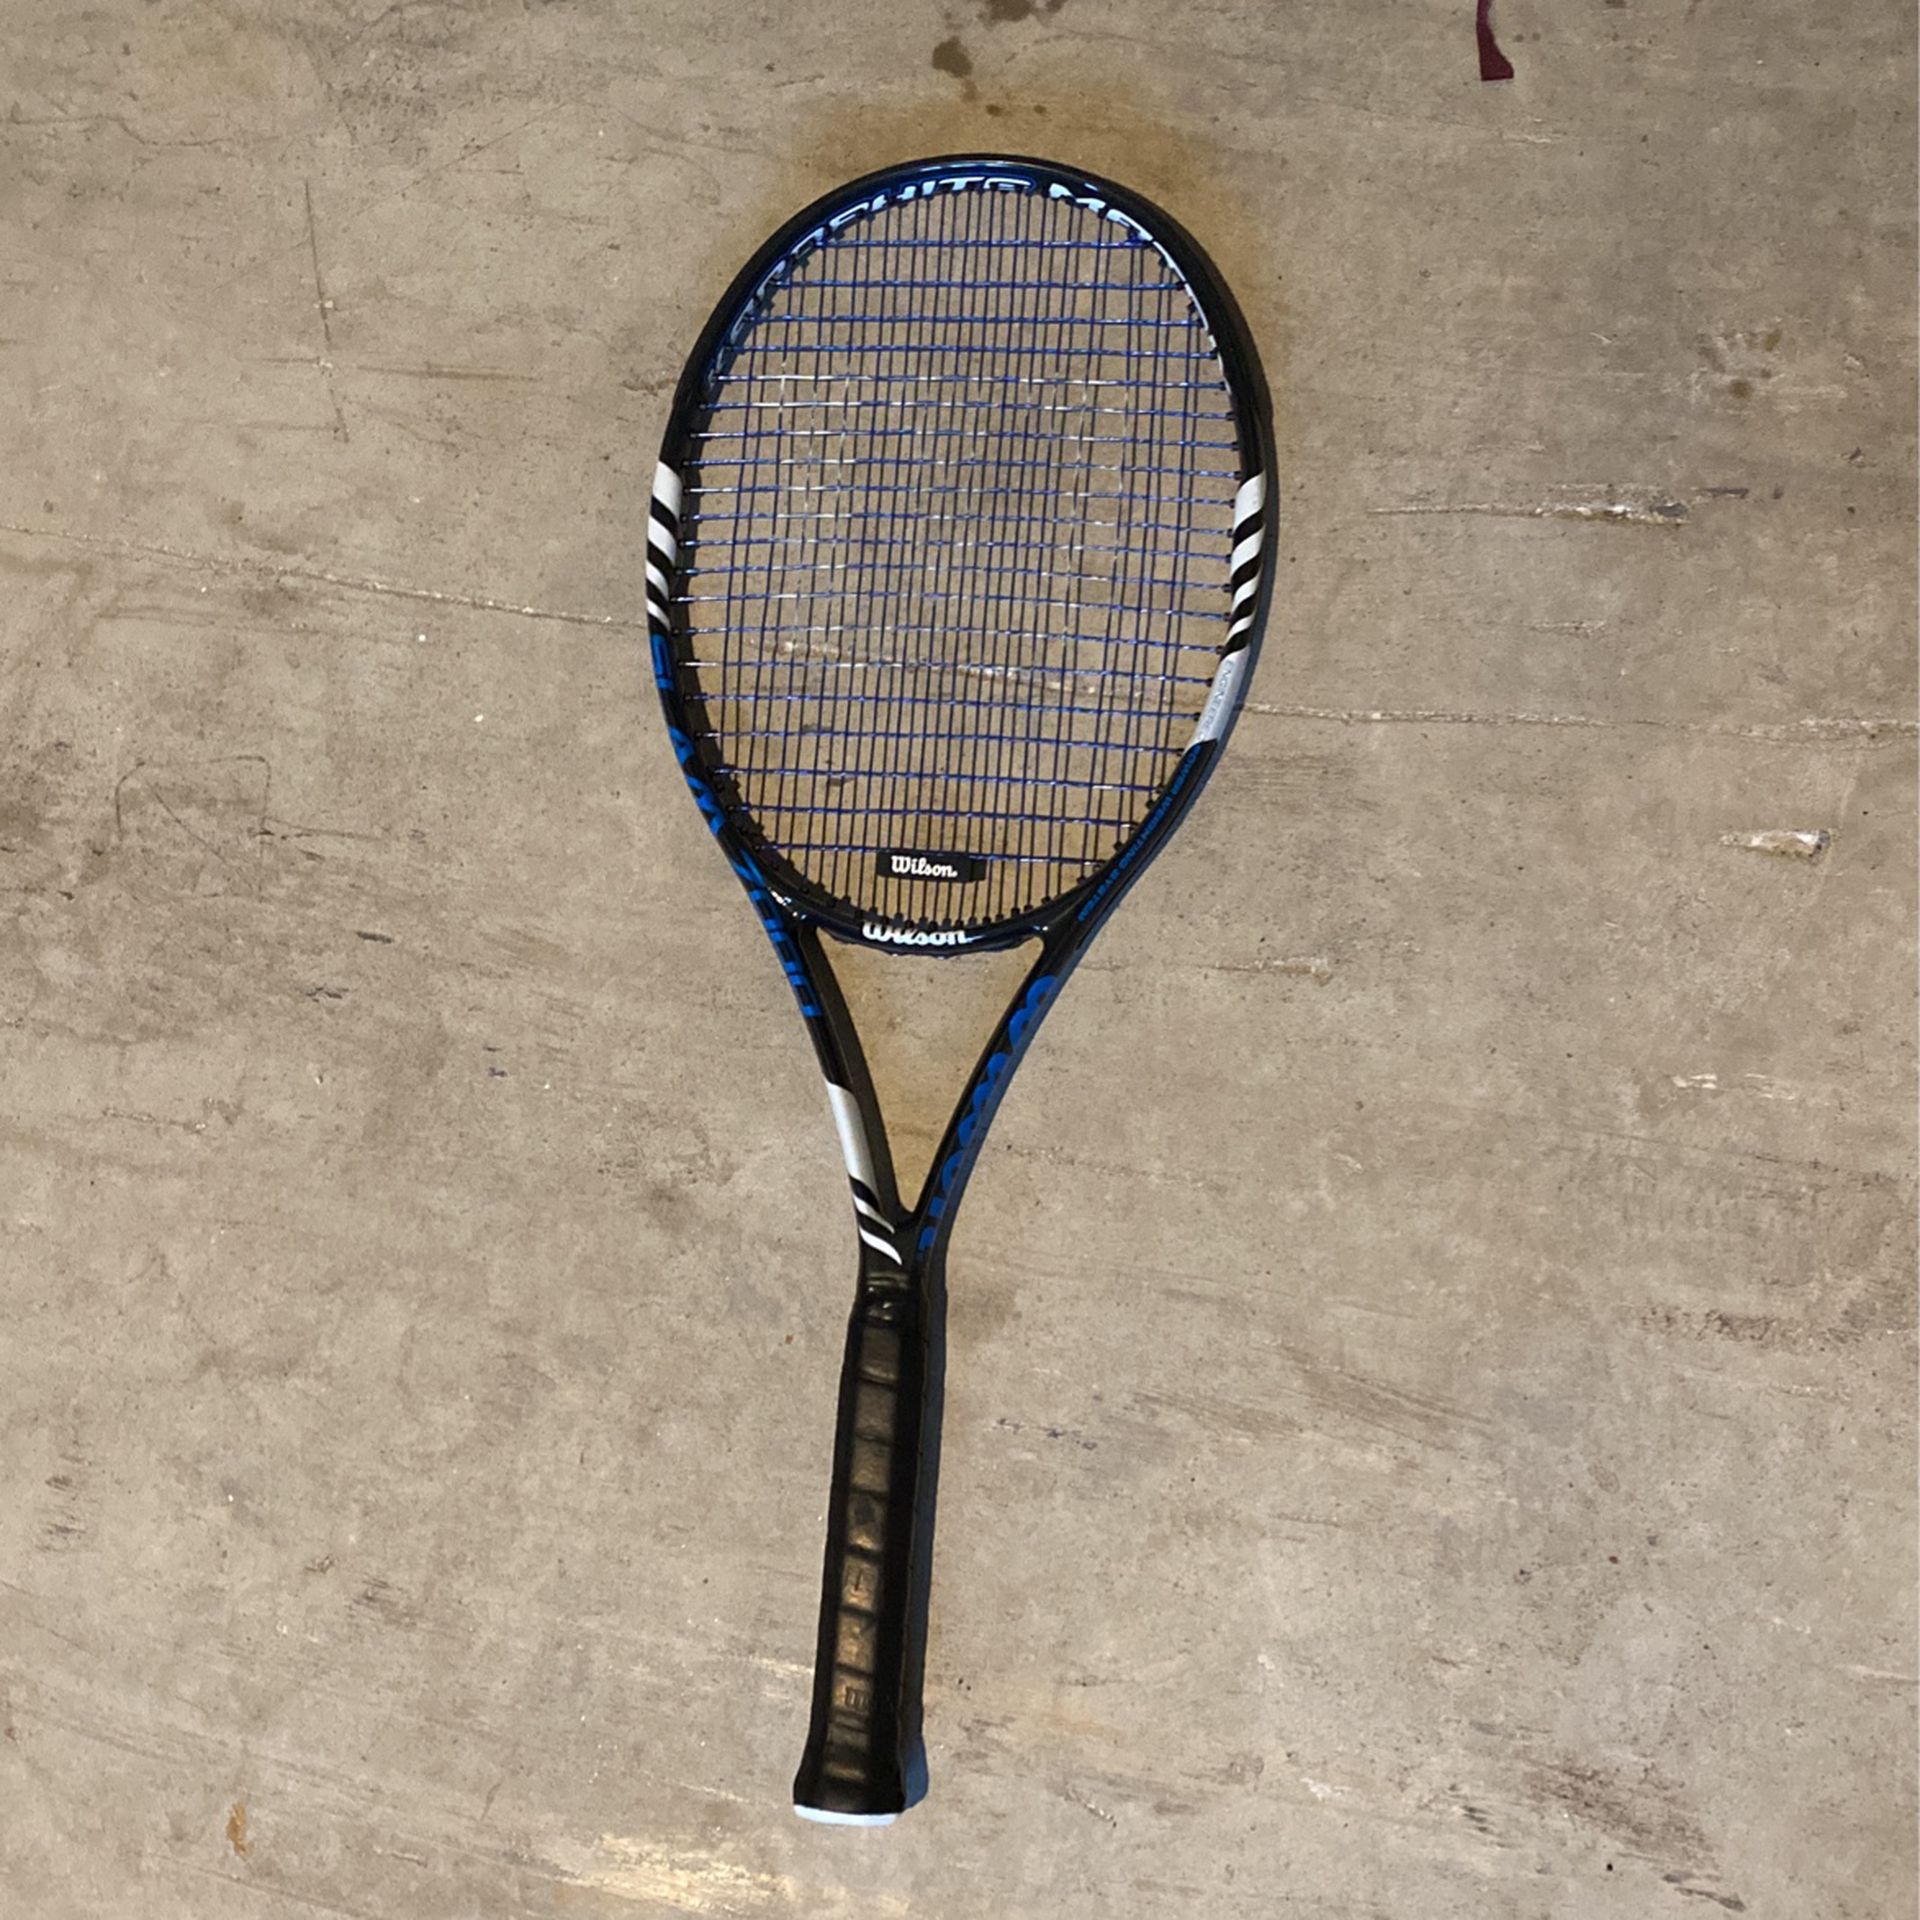 New Wilson Tennis Racket